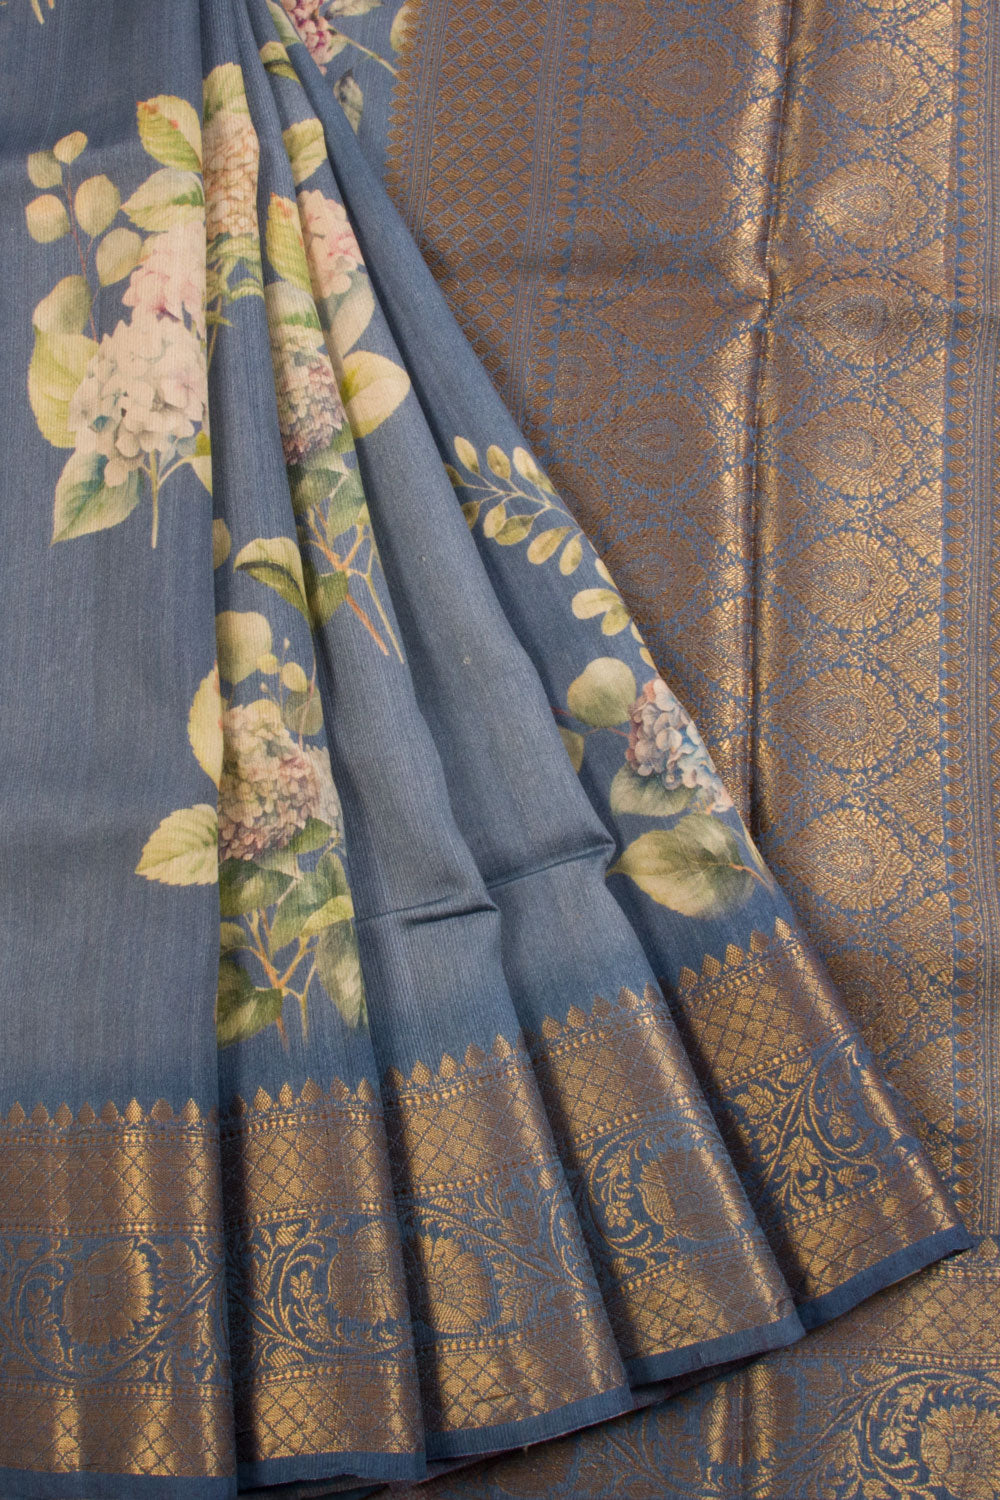 Buy BHAKARWADi Women'S Art Silk Saree With Blouse Piece (Bjp_Brown_Brown-1)  at Amazon.in